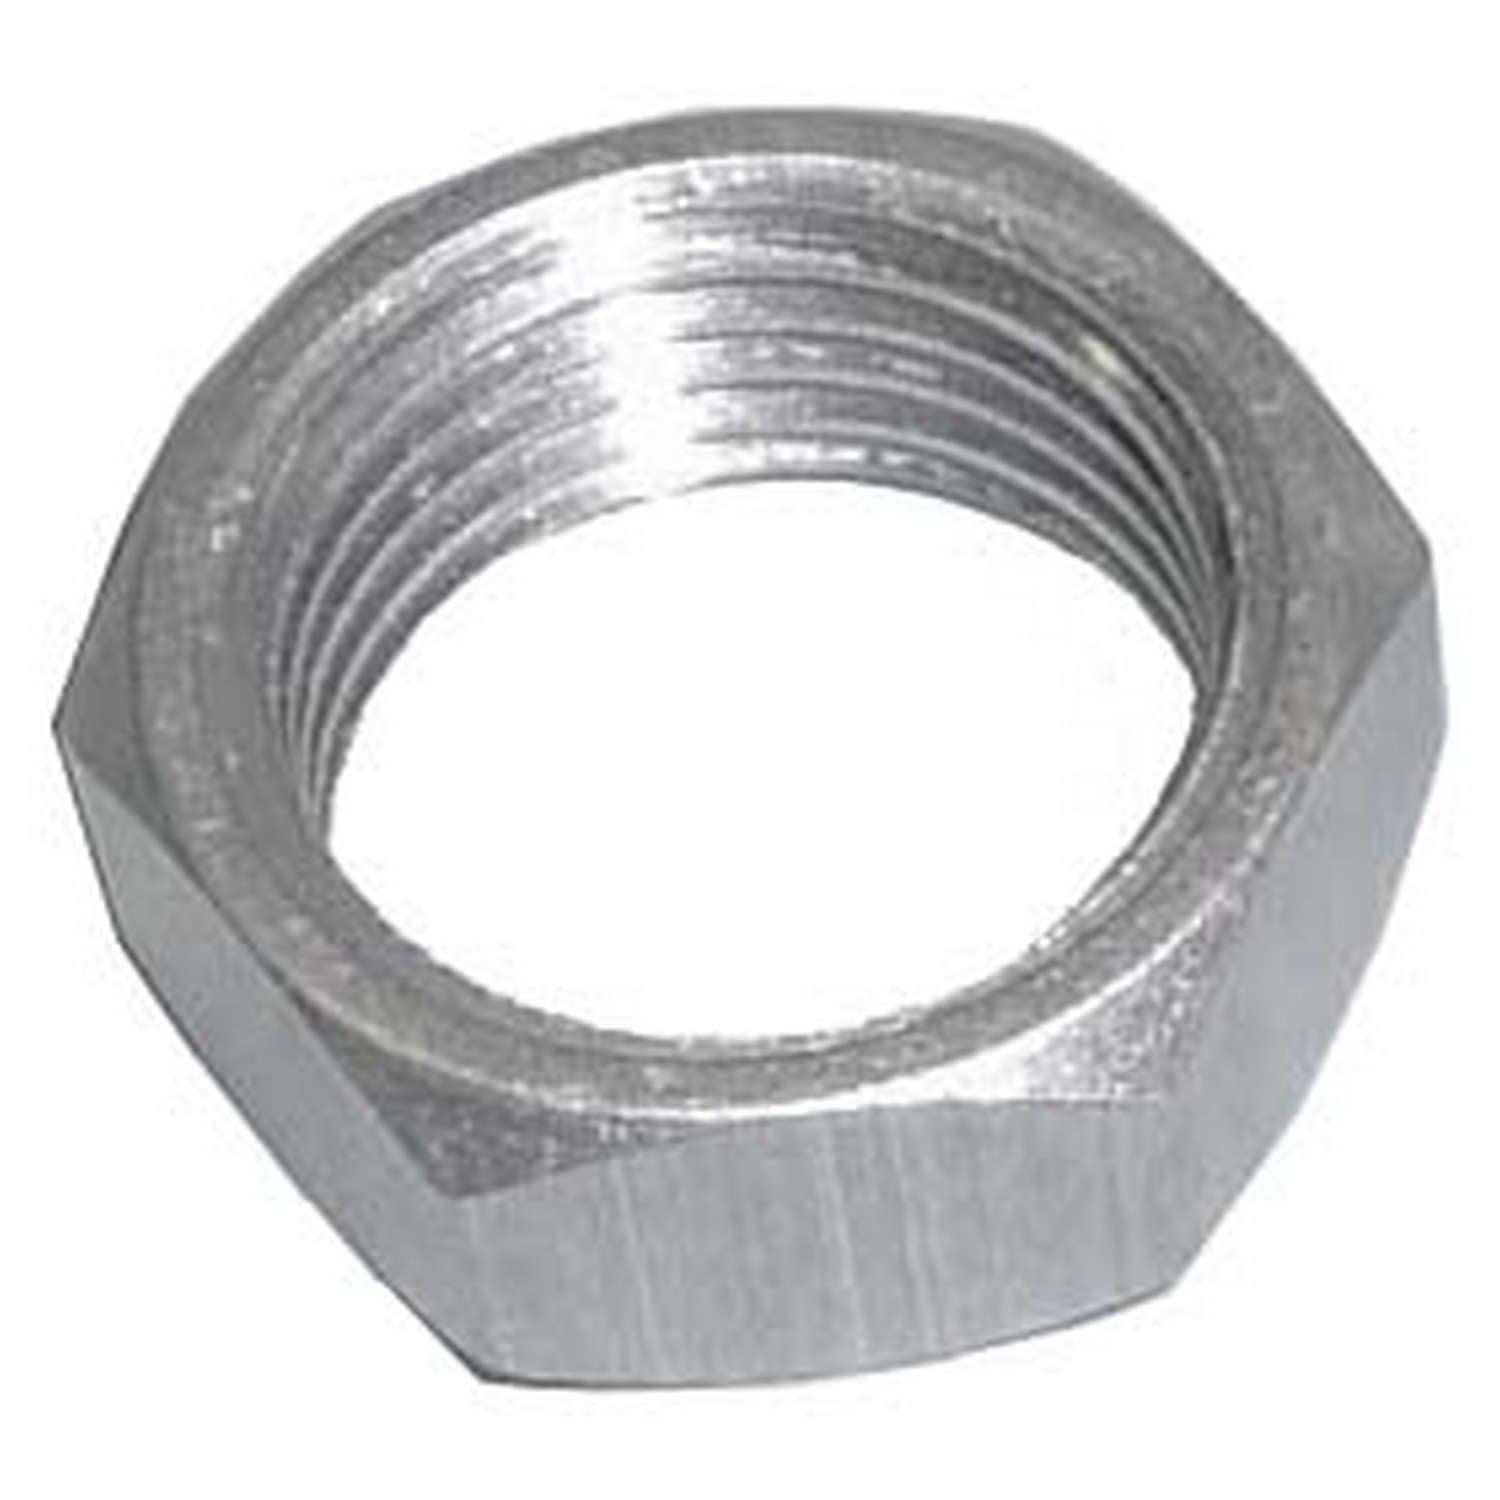 Jam Nut 5/8in RH Thread Aluminum - Burlile Performance Products